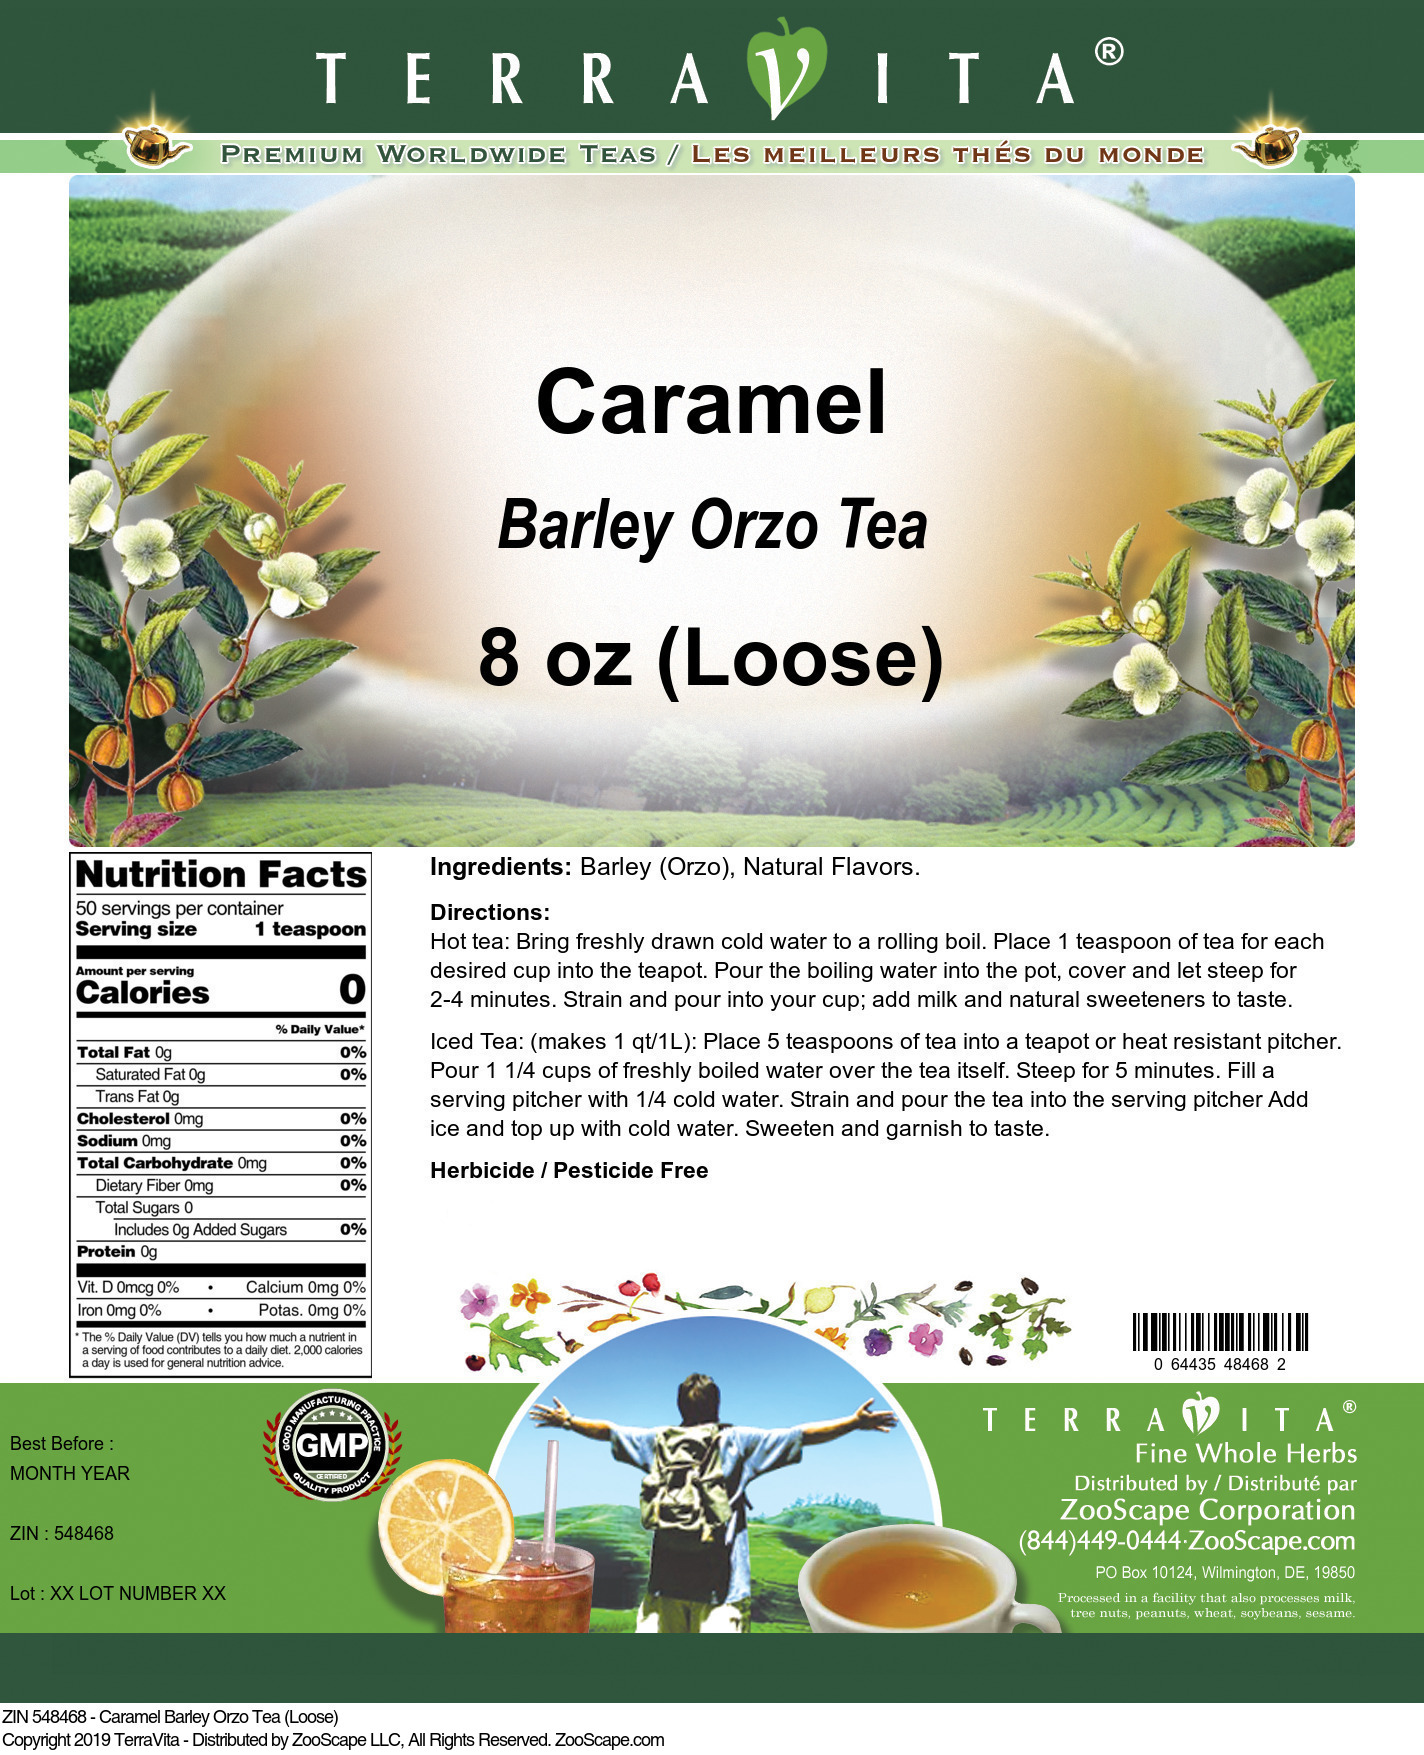 Caramel Barley Orzo Tea (Loose) - Label